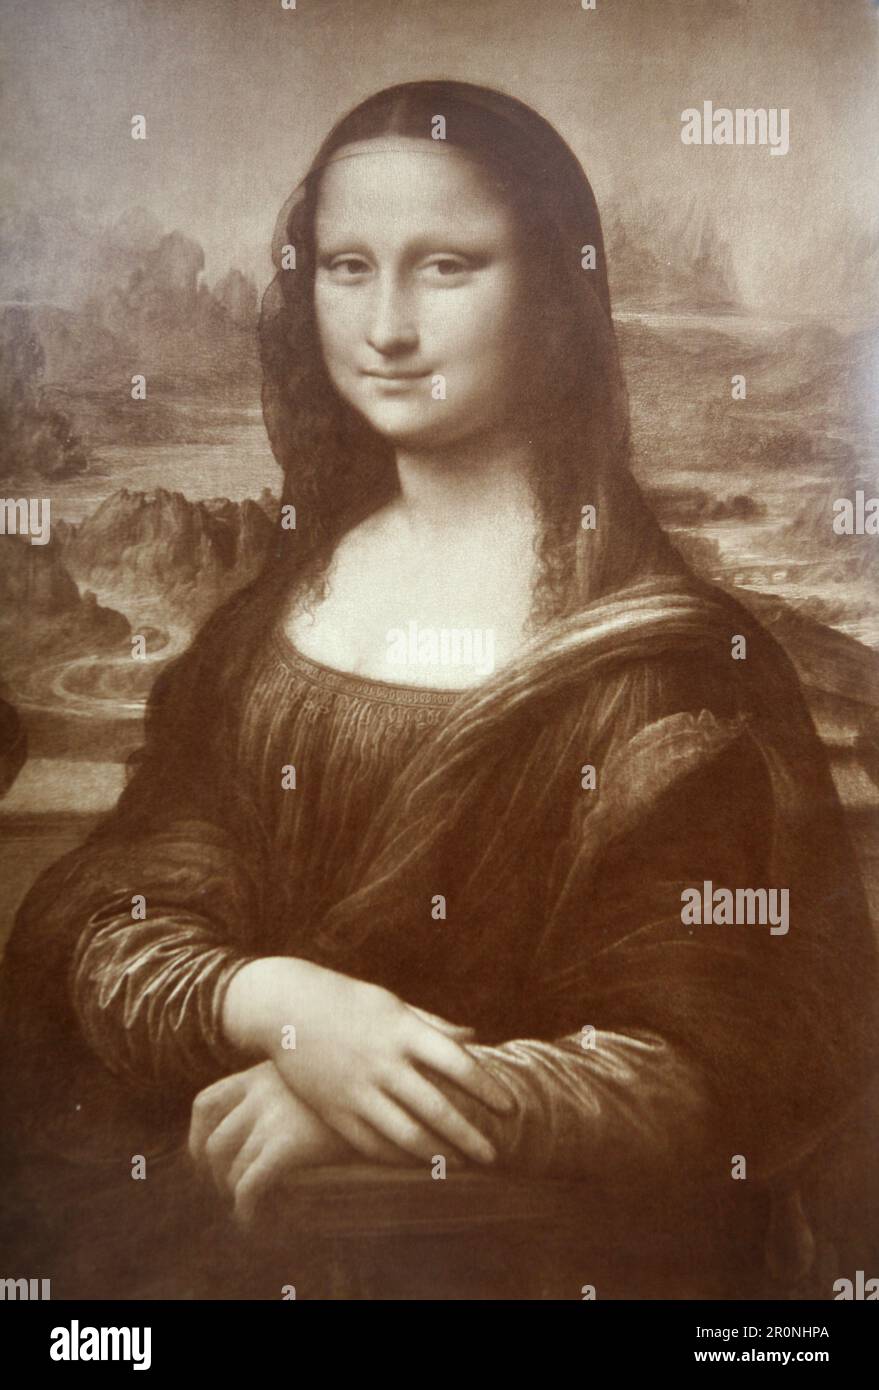 Mona Lisa, portrait painting by Italian artist Leonardo da Vinci, Paris, France 1890s Stock Photo